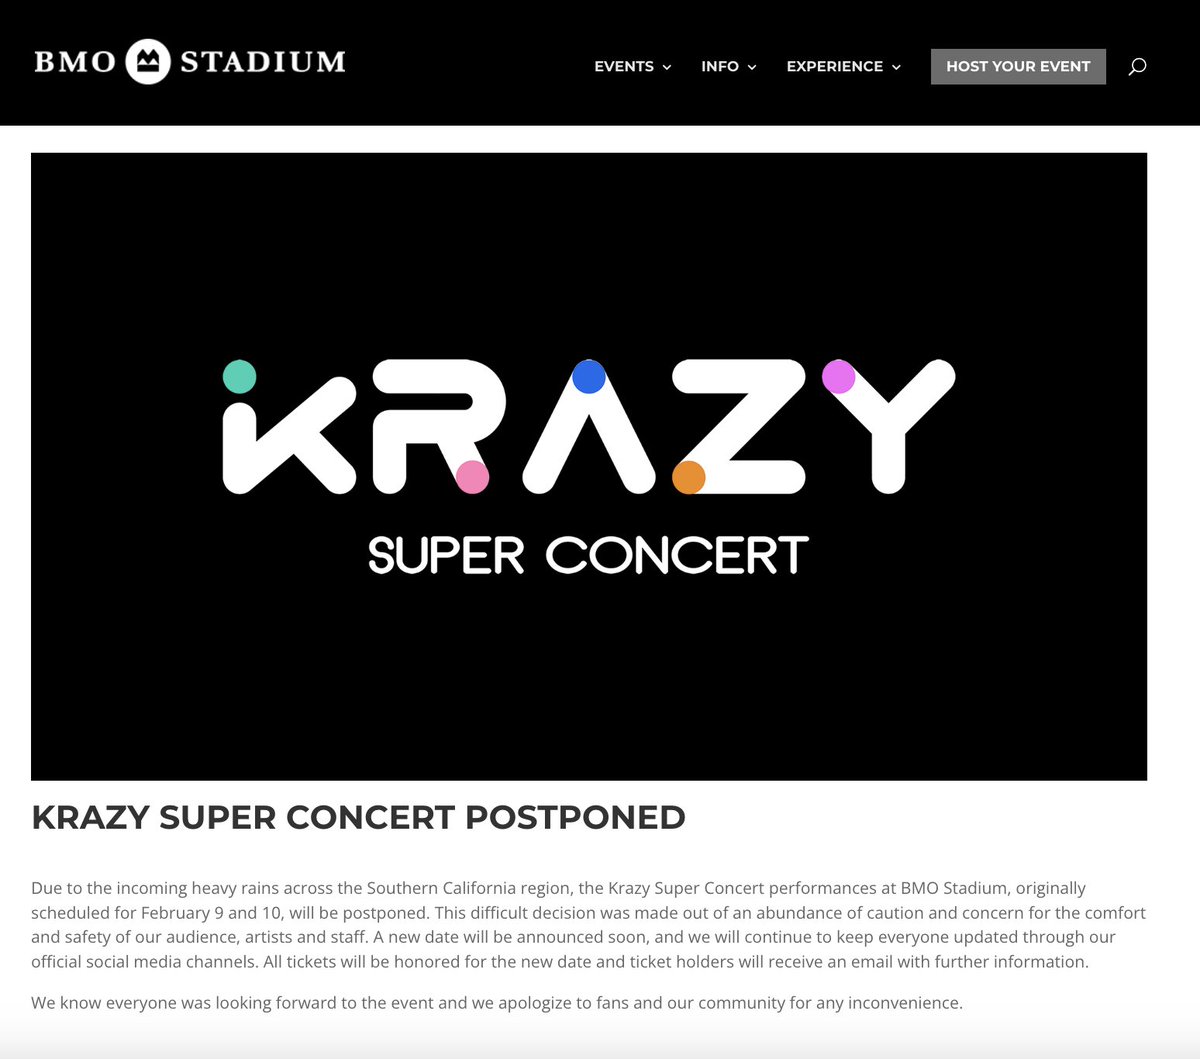 Please check the official announcement. bmostadium.com/krazy-super-co…